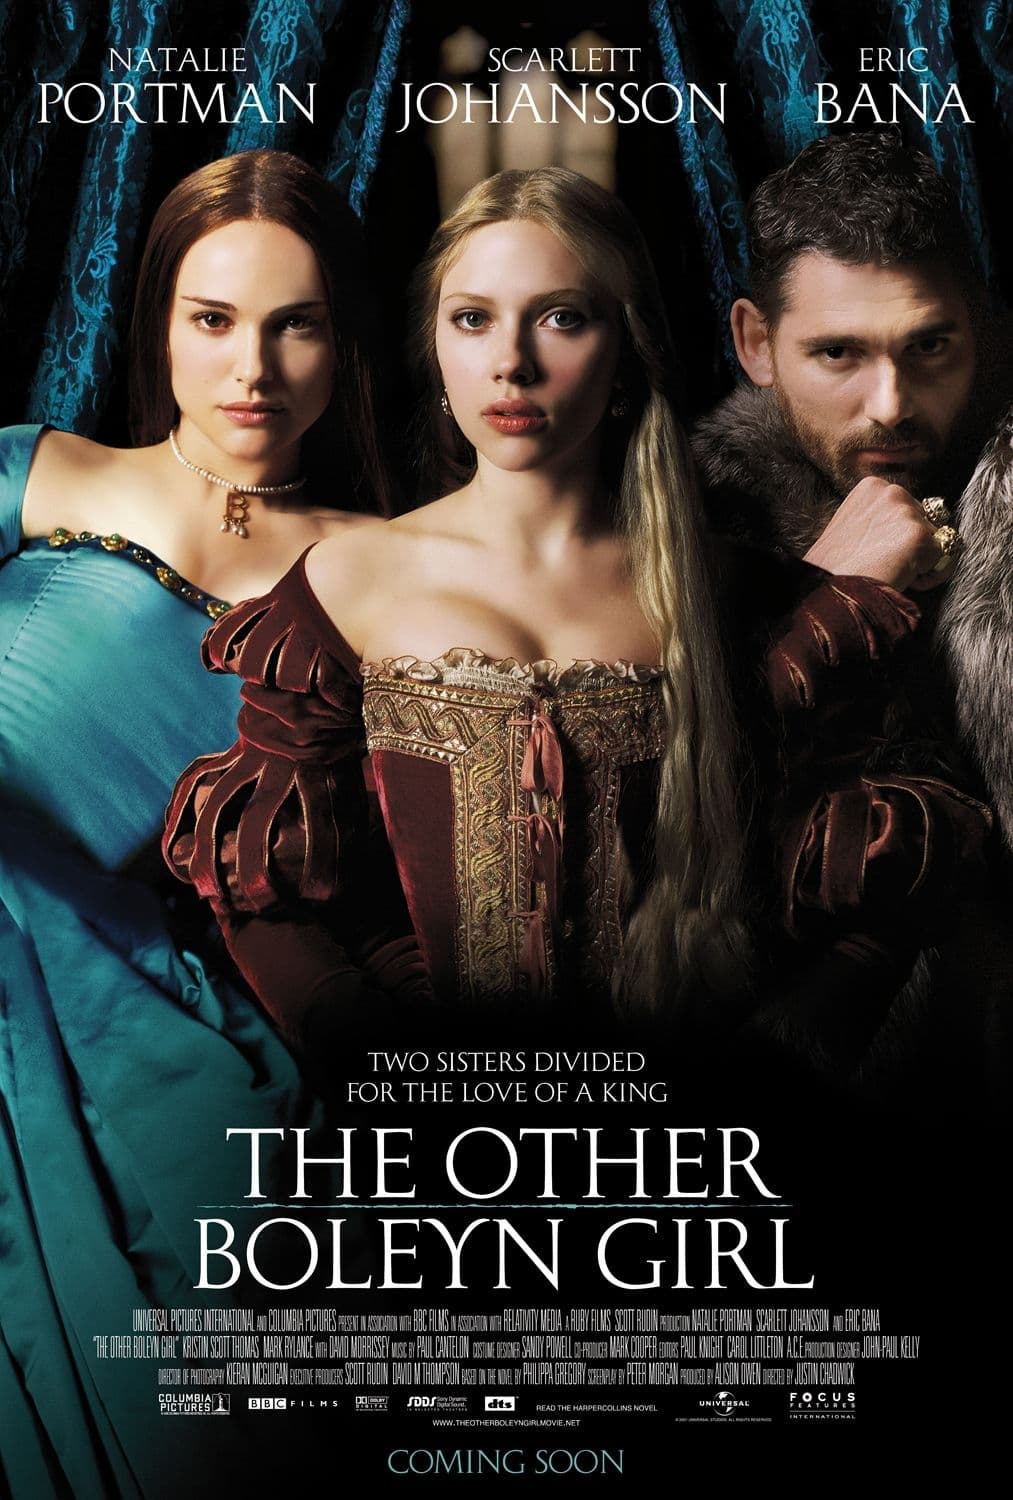 EN - The Other Boleyn Girl (2008) SCARLETT JOHANSSON